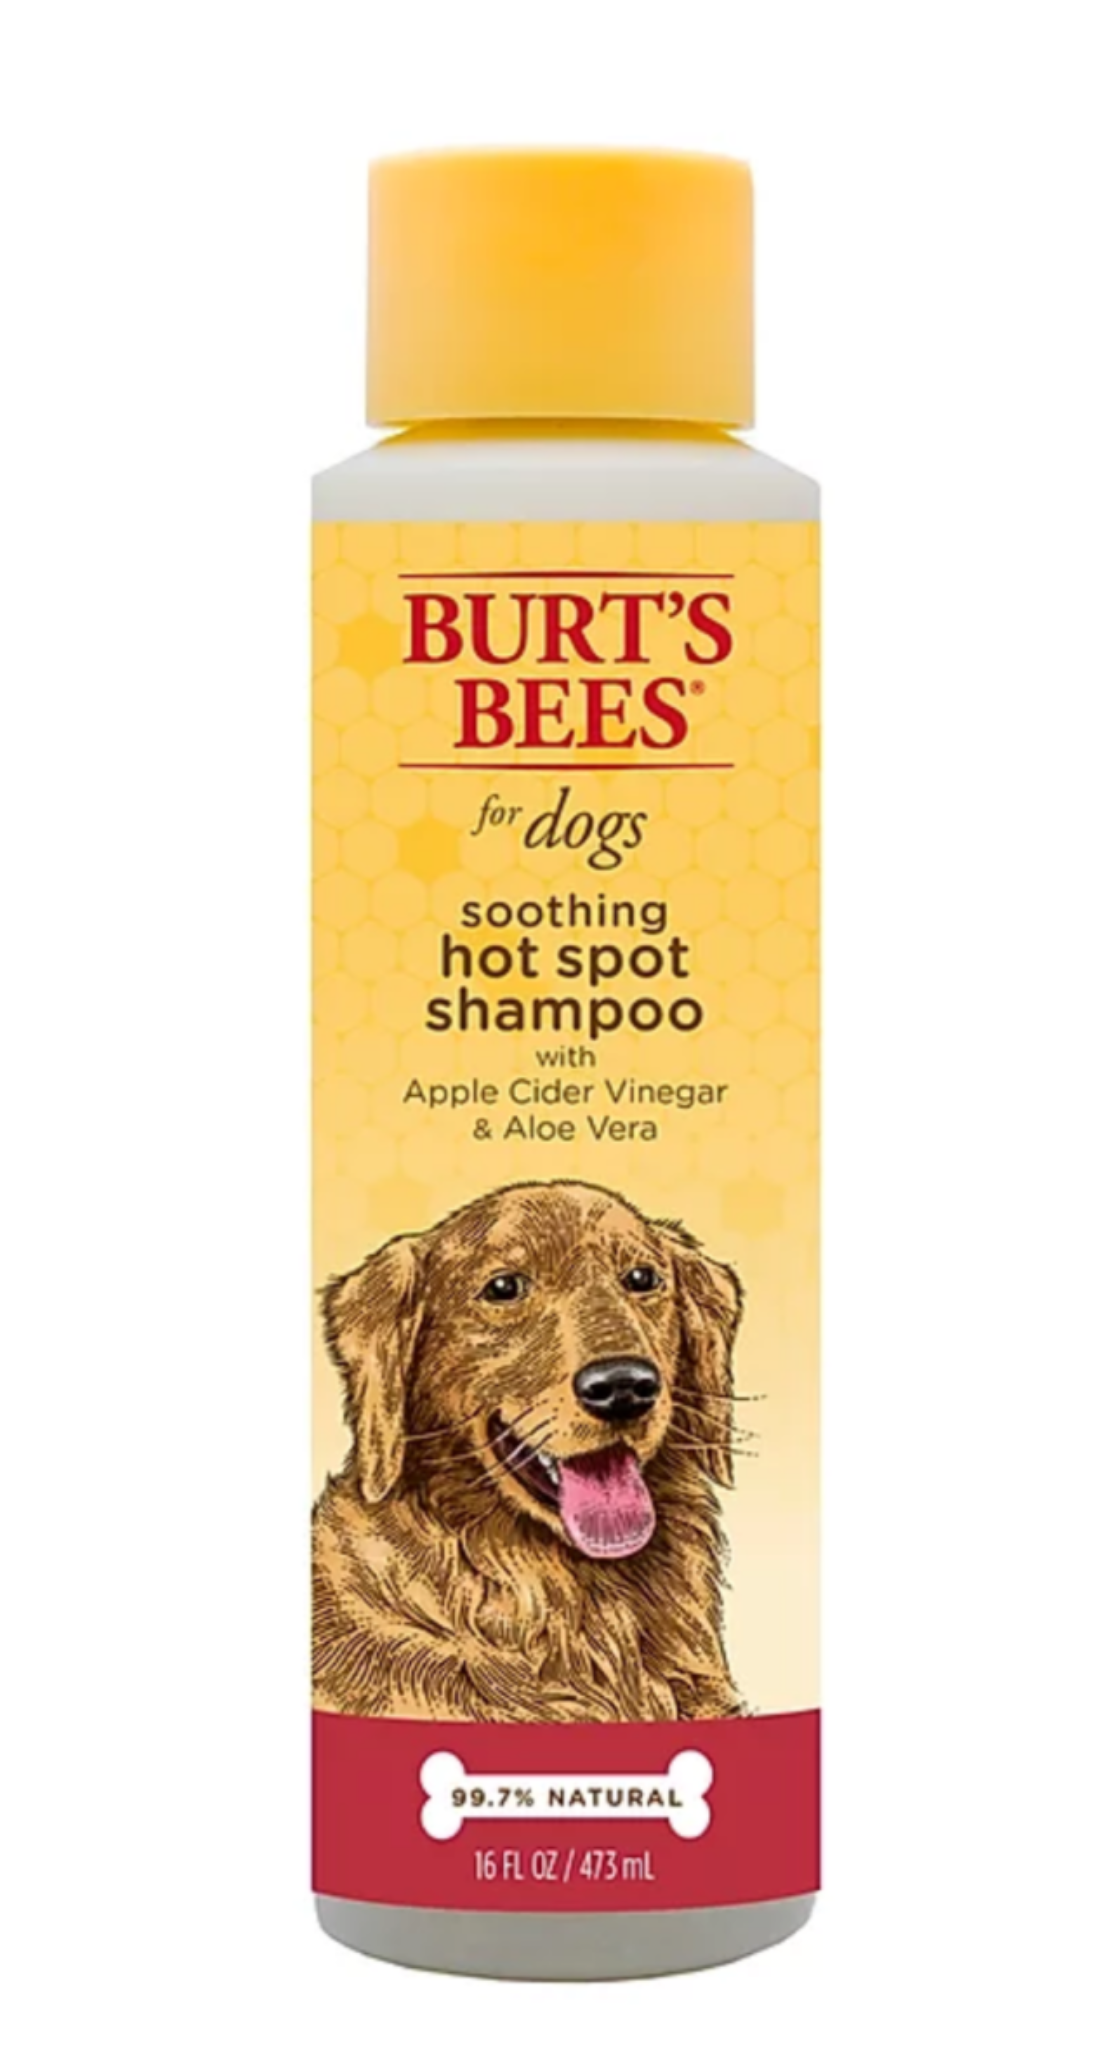 Burt's Bees Soothing Hot Spot Shampoo
With Apple Cider Vinegar & Aloe Vera